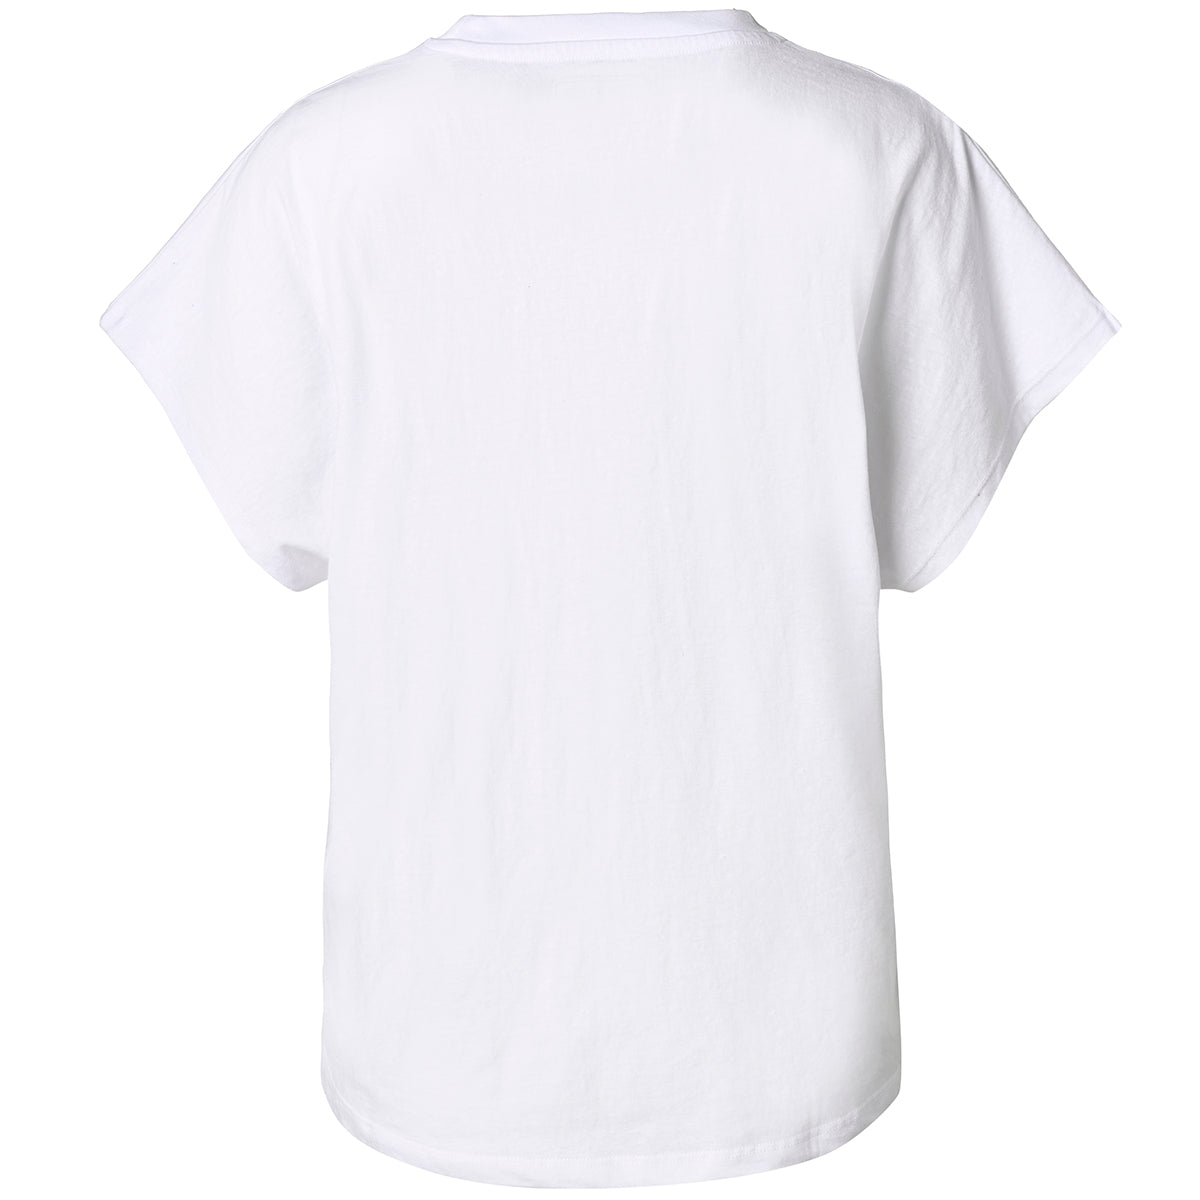 Camiseta Blanca Duva Mujer - imagen 2